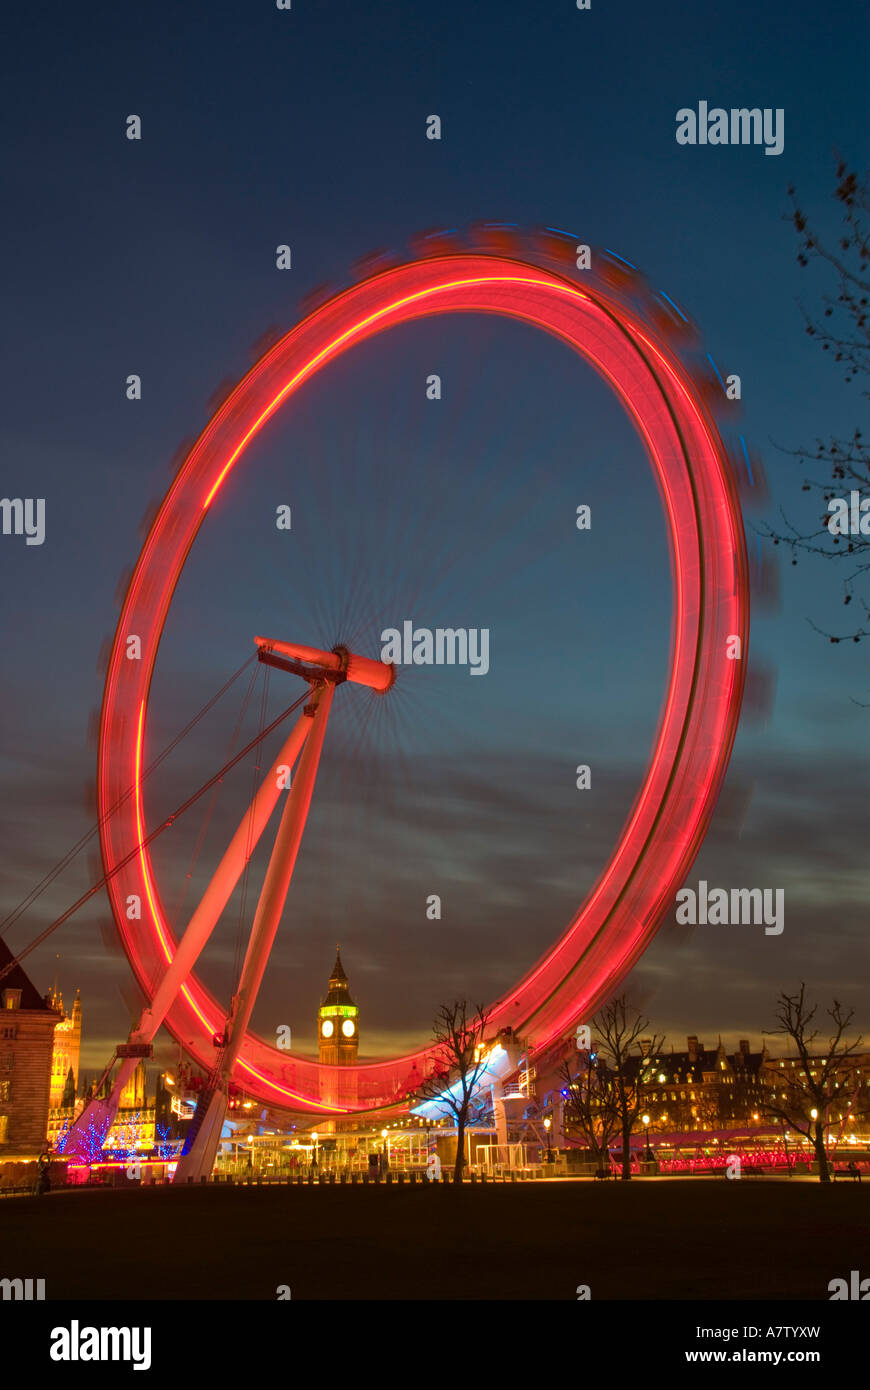 Ferris wheel lit up at night, Millennium Wheel, London, England Stock Photo